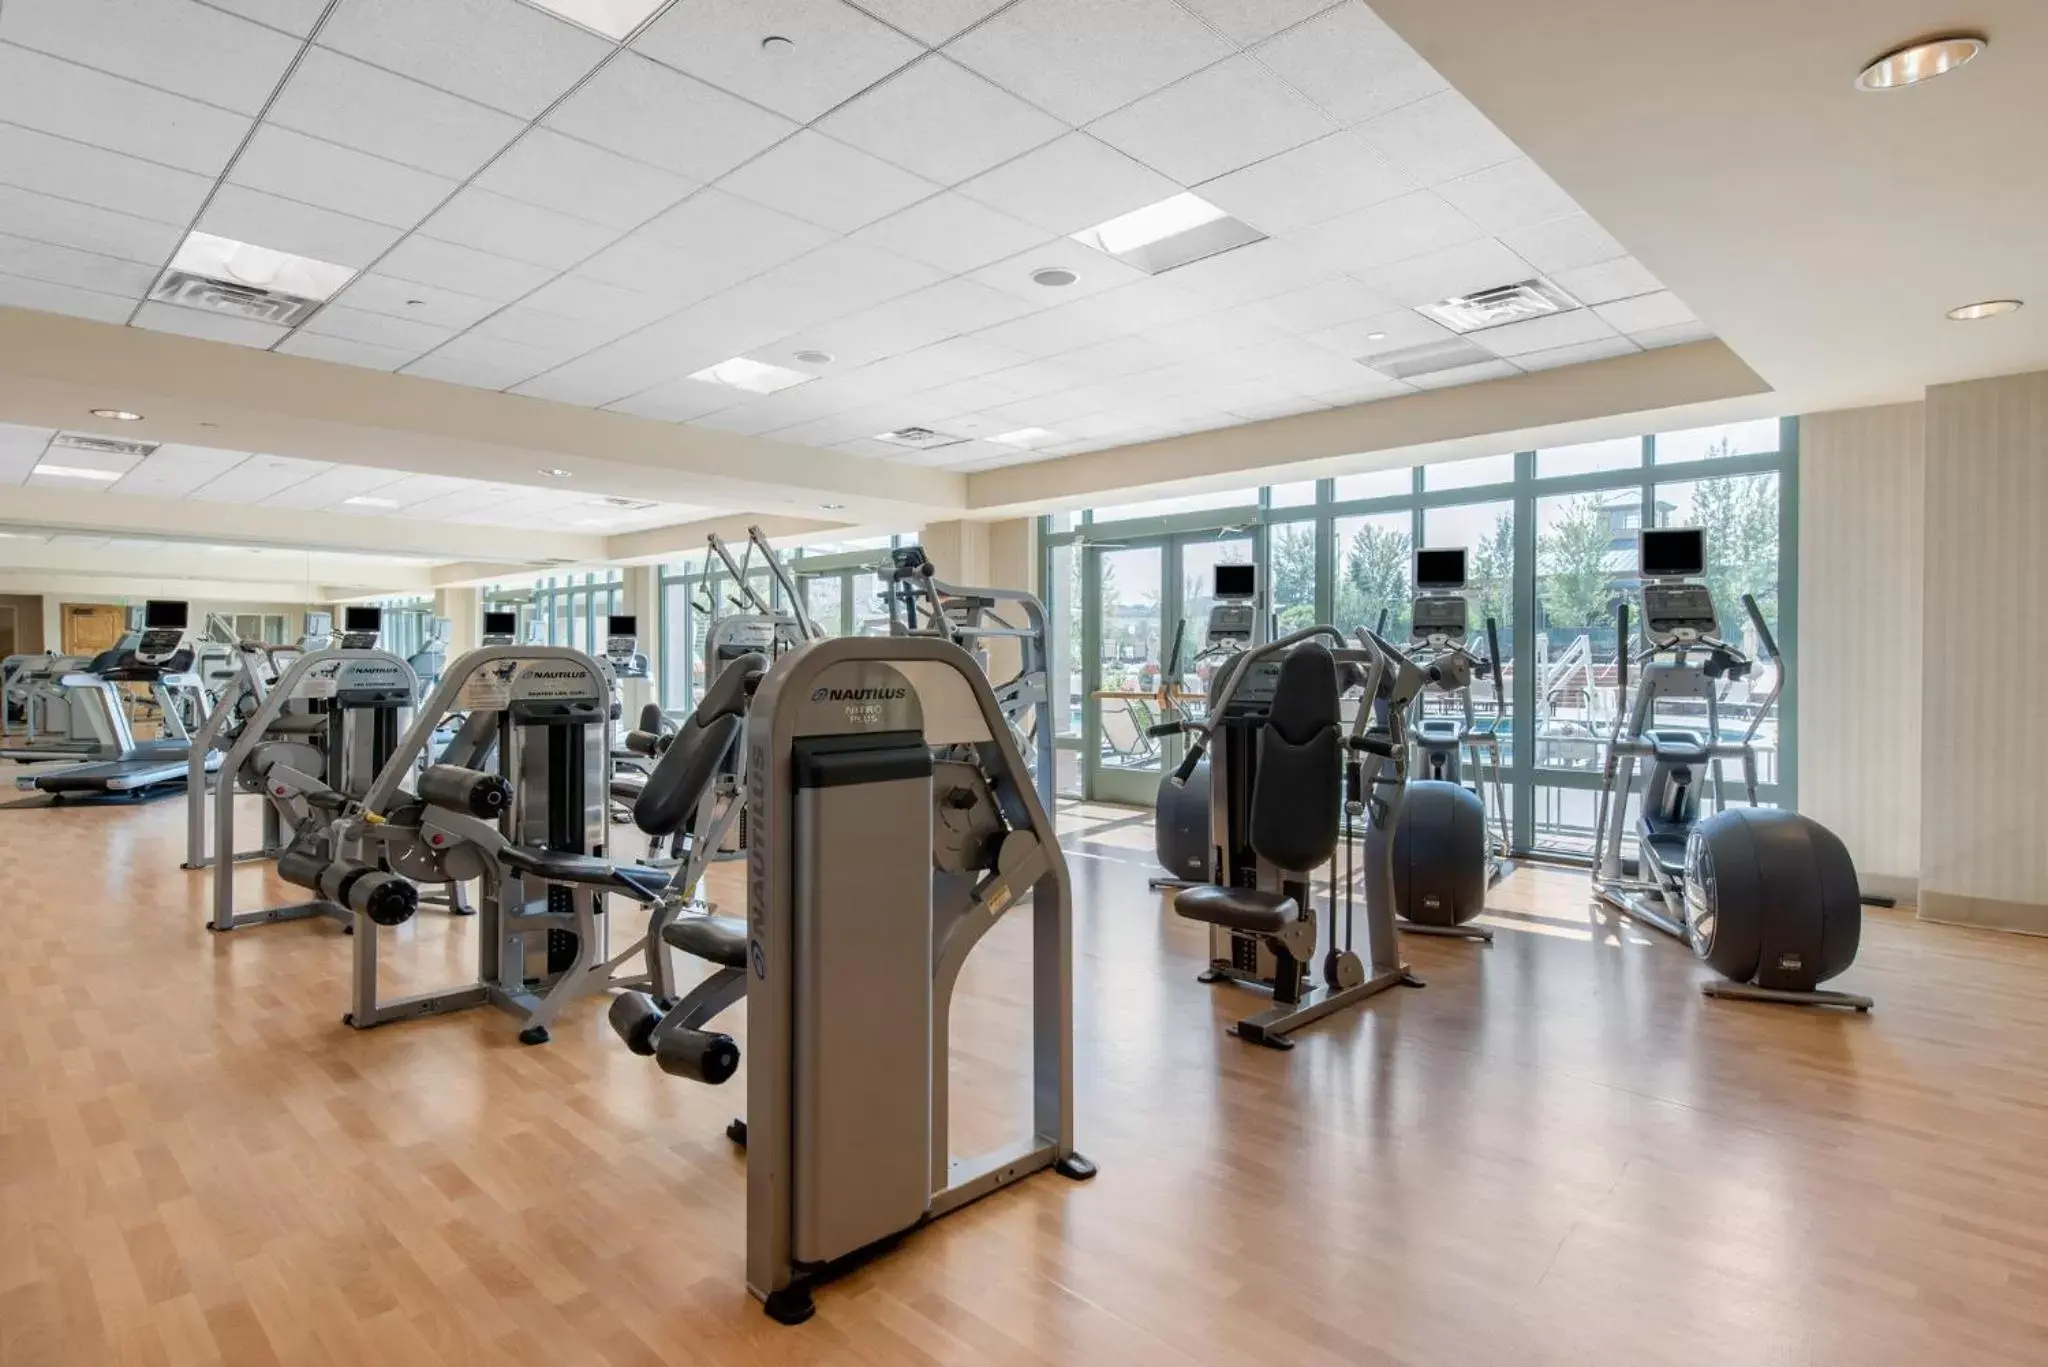 Fitness centre/facilities, Fitness Center/Facilities in Omni Interlocken Hotel